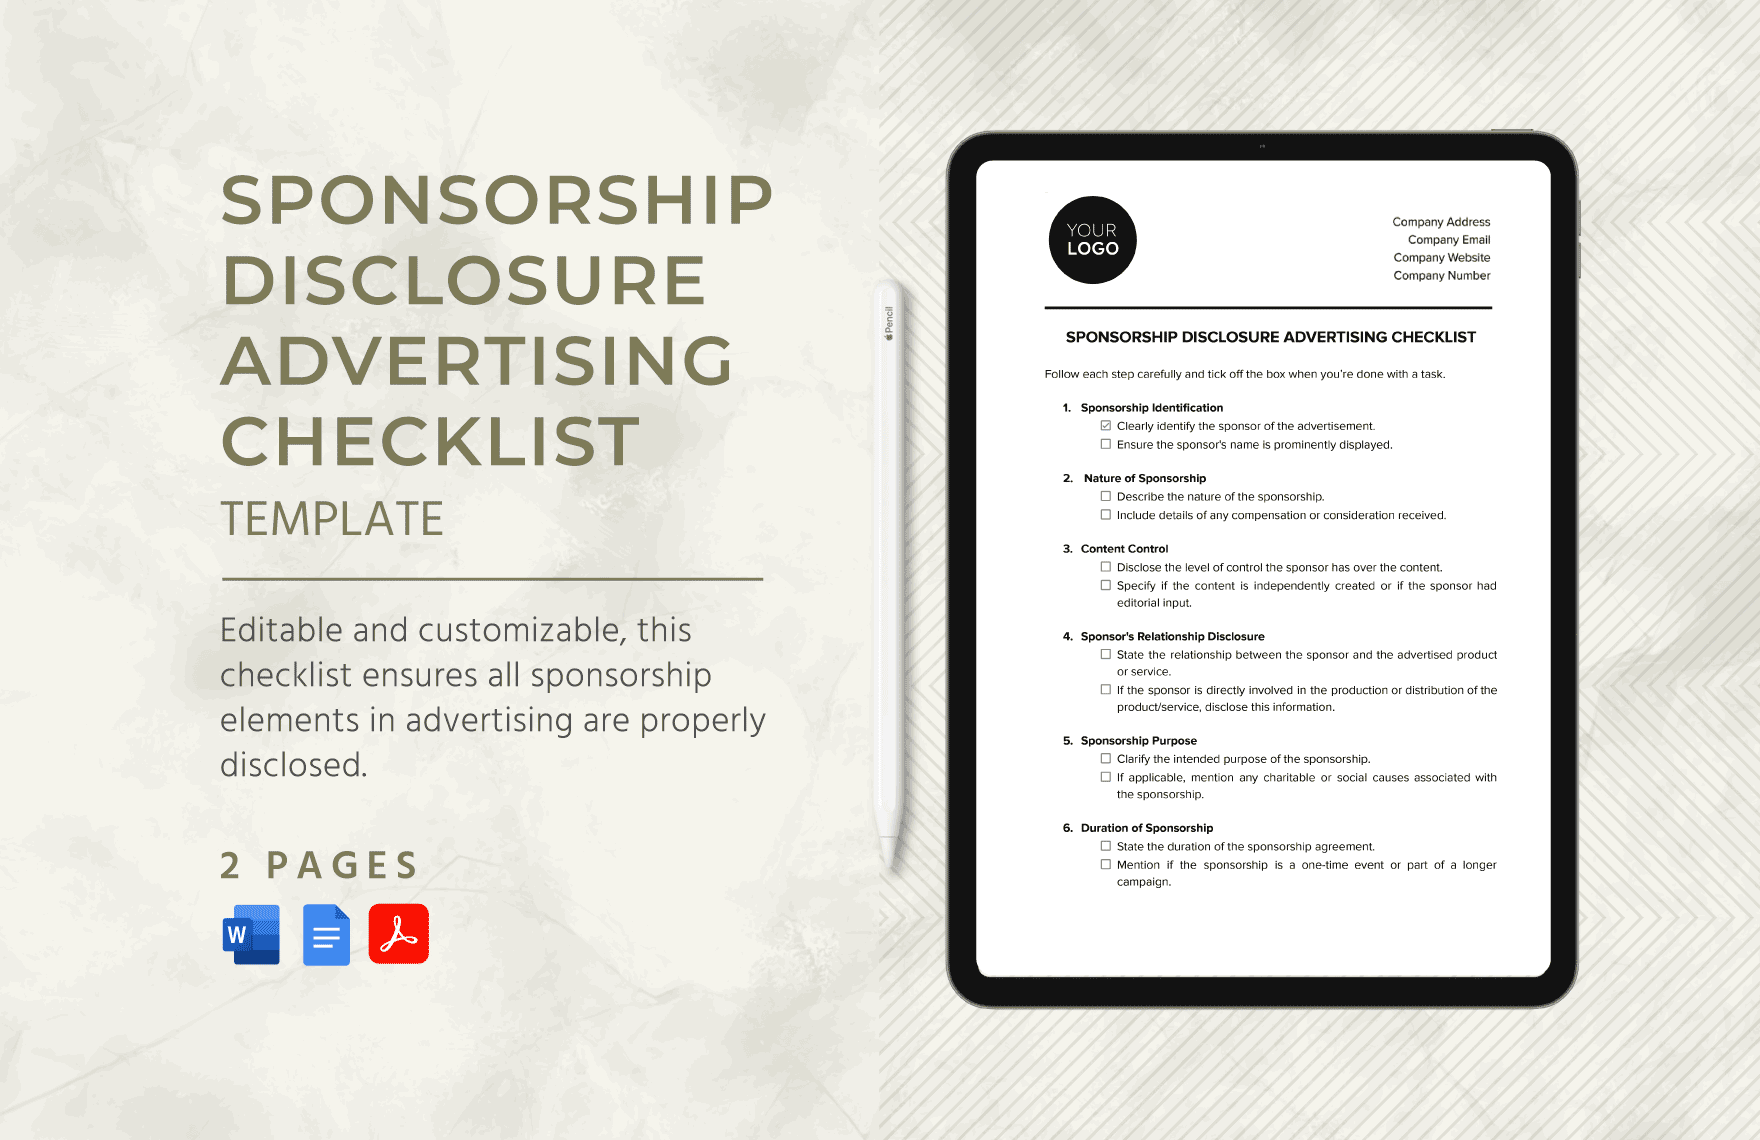 Sponsorship Disclosure Advertising Checklist Template in Word, Google Docs, PDF